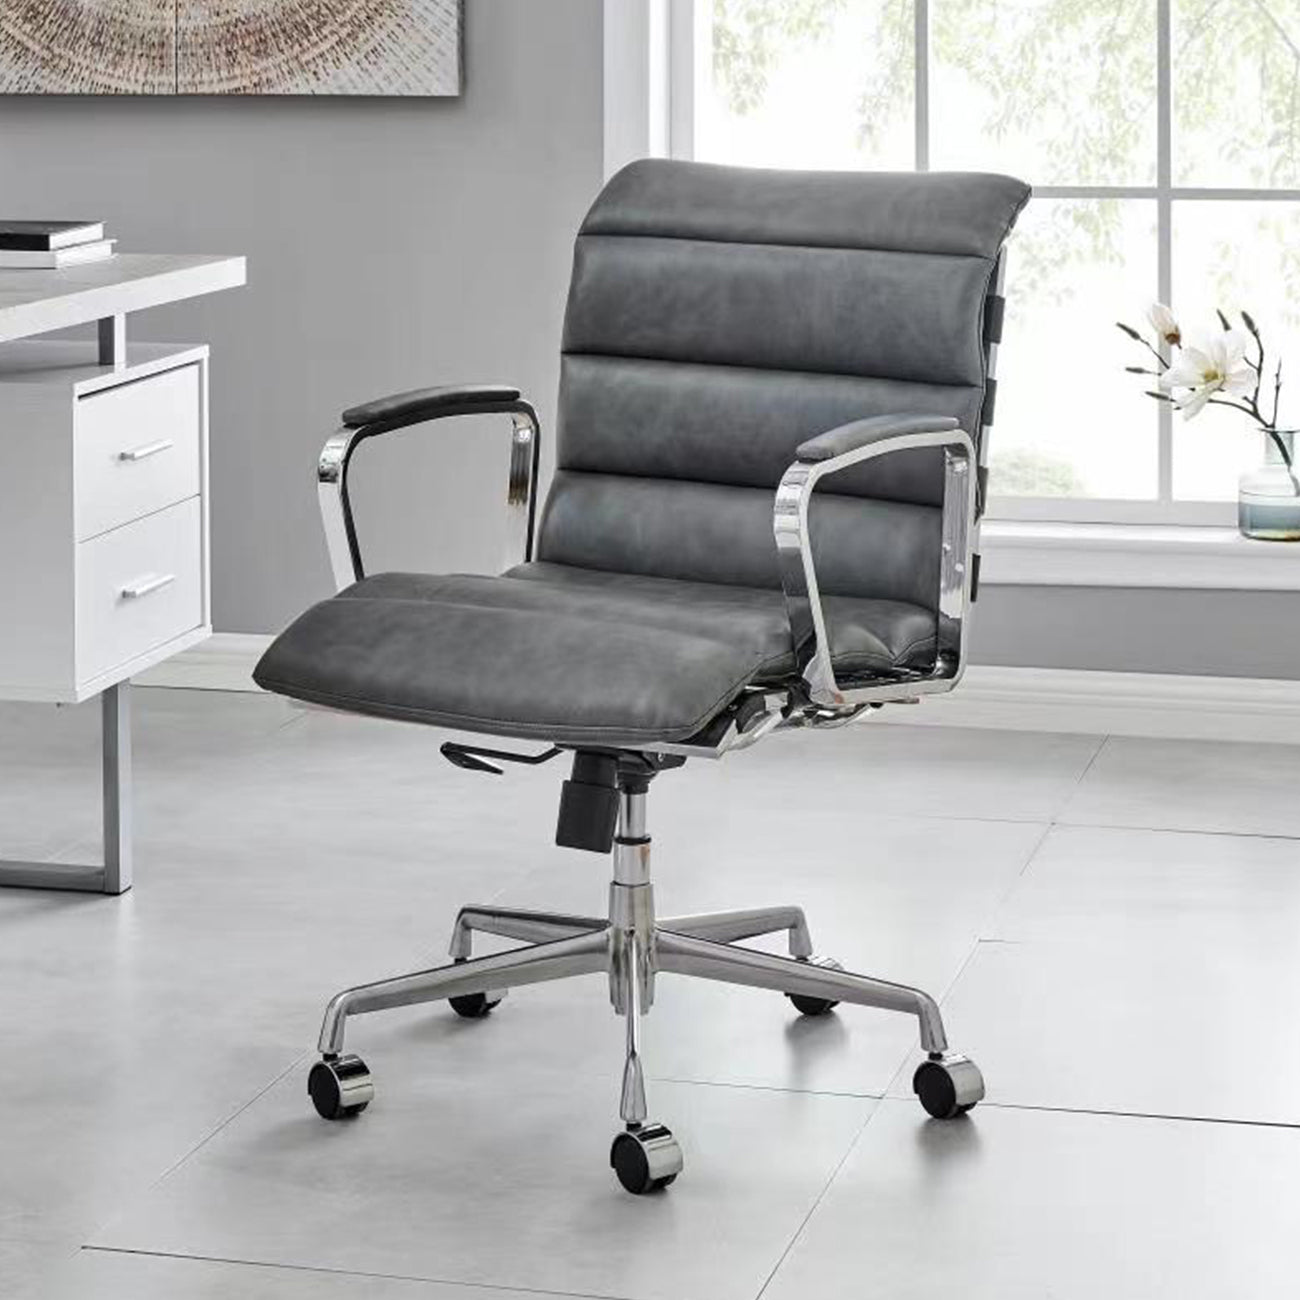 Modern swivel office desk chair luxury executive boss ergonomic computer chair armrest brown color metal frame office chair